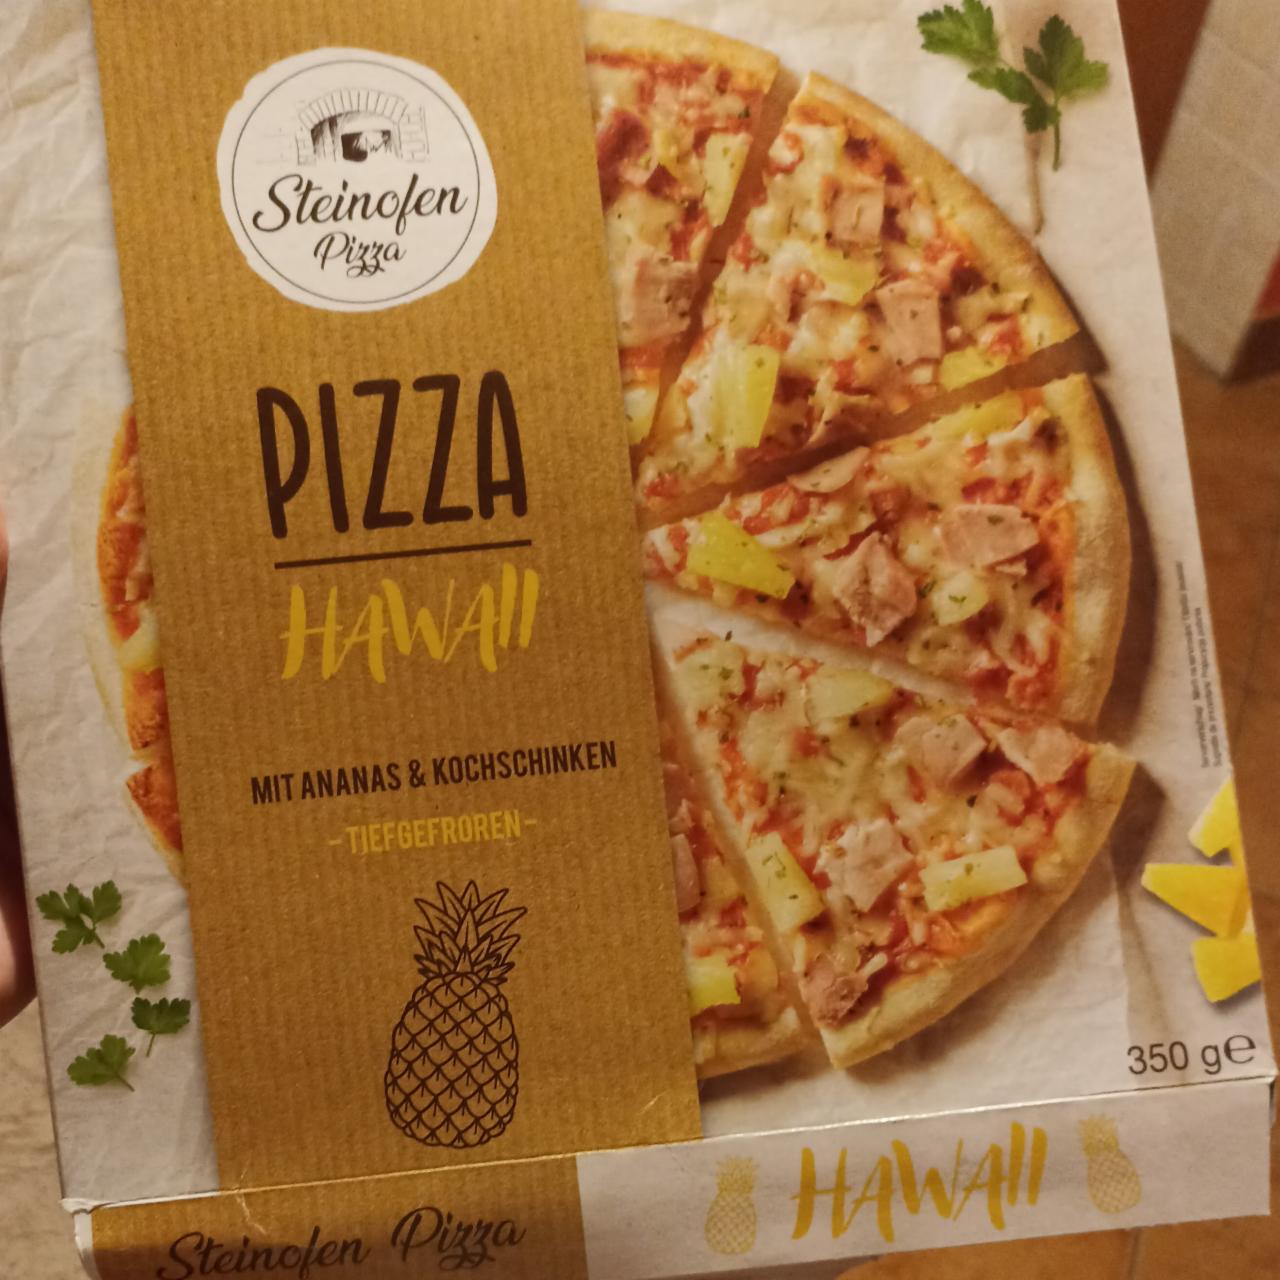 Képek - Hawaii pizza Steinofen pizza